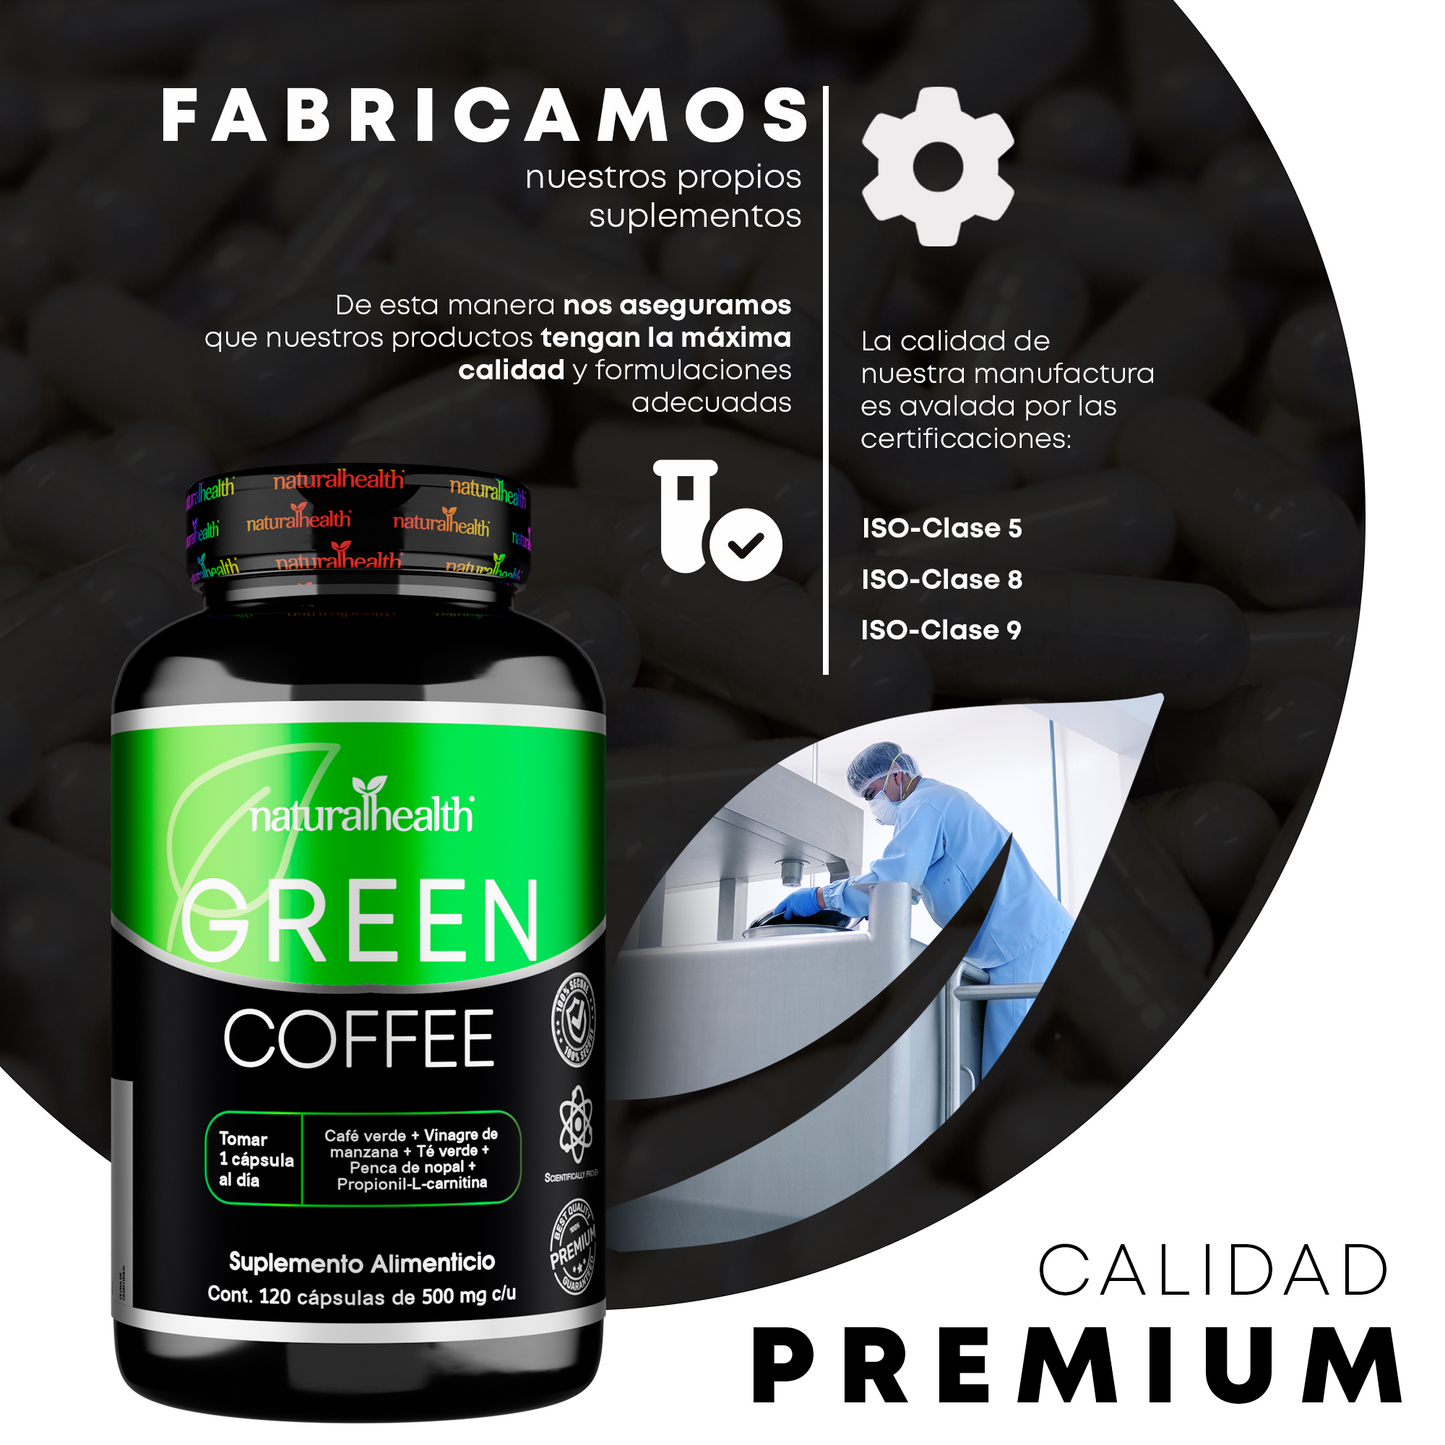 Premium | Green Coffee